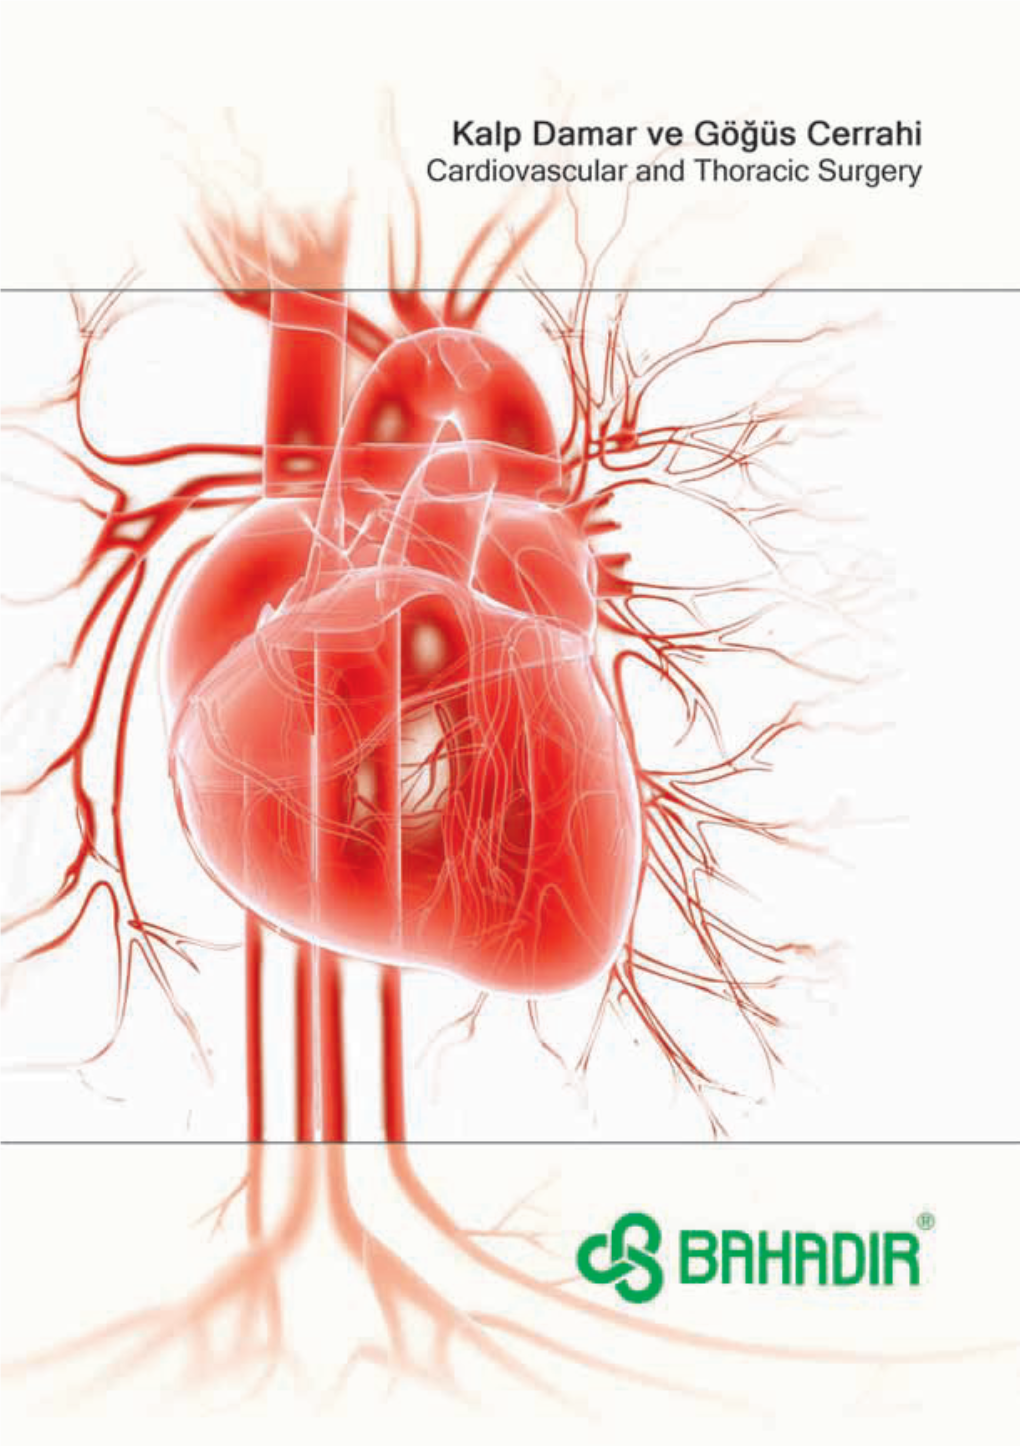 Kalp Damar Ve Göğüs Cerrahi Cardiovascular and Thoracic Surgery